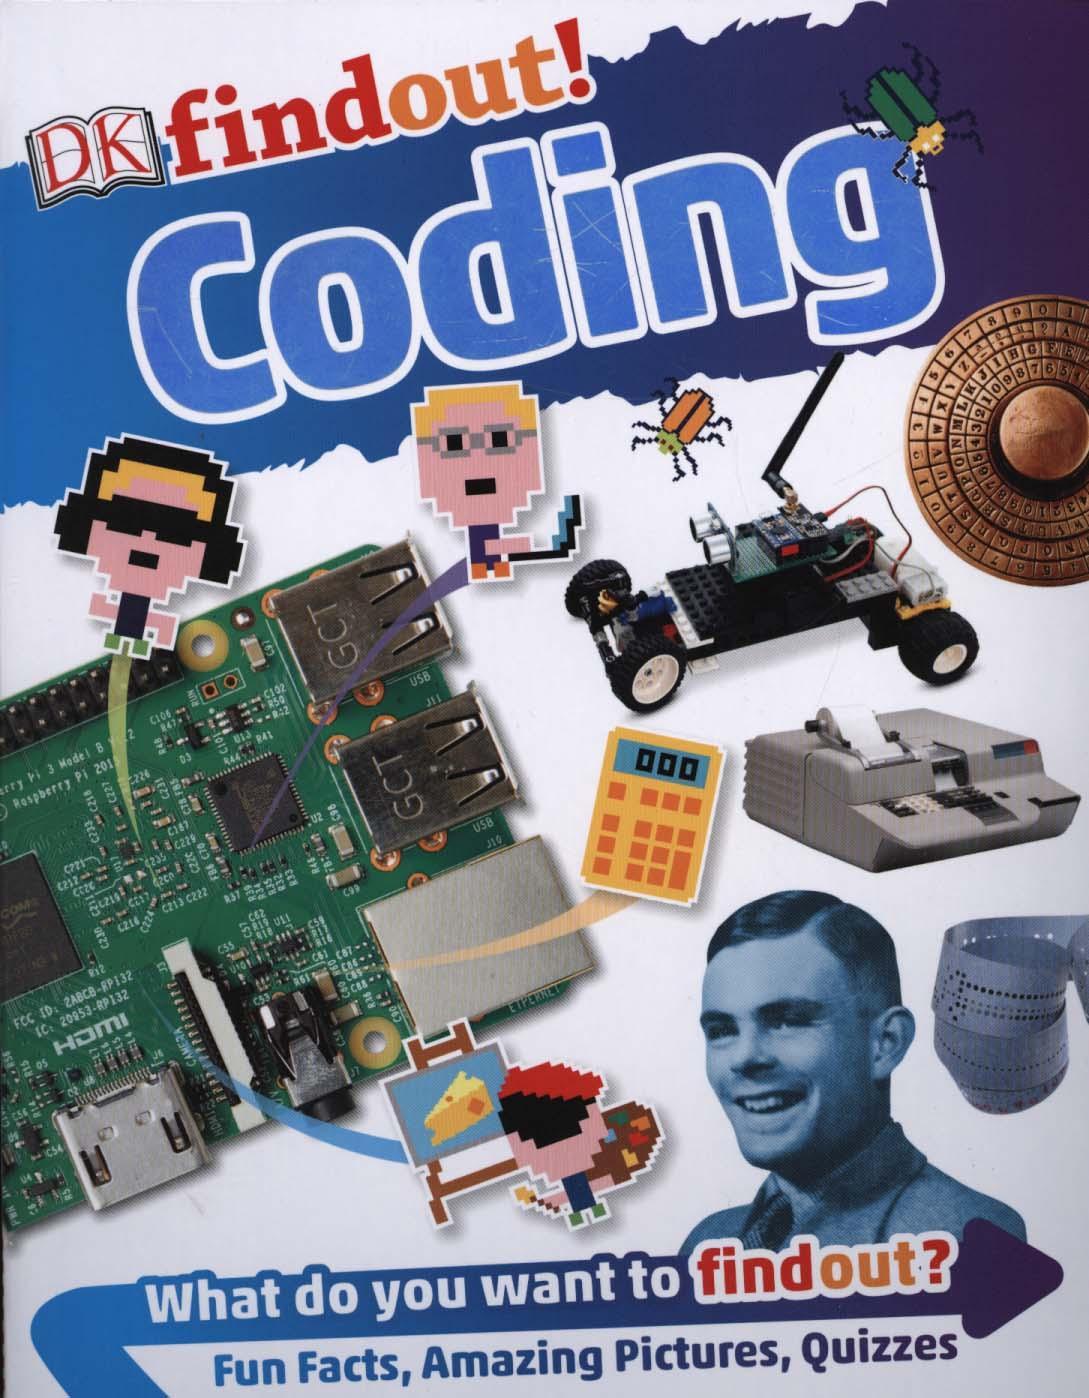 DKfindout! Coding